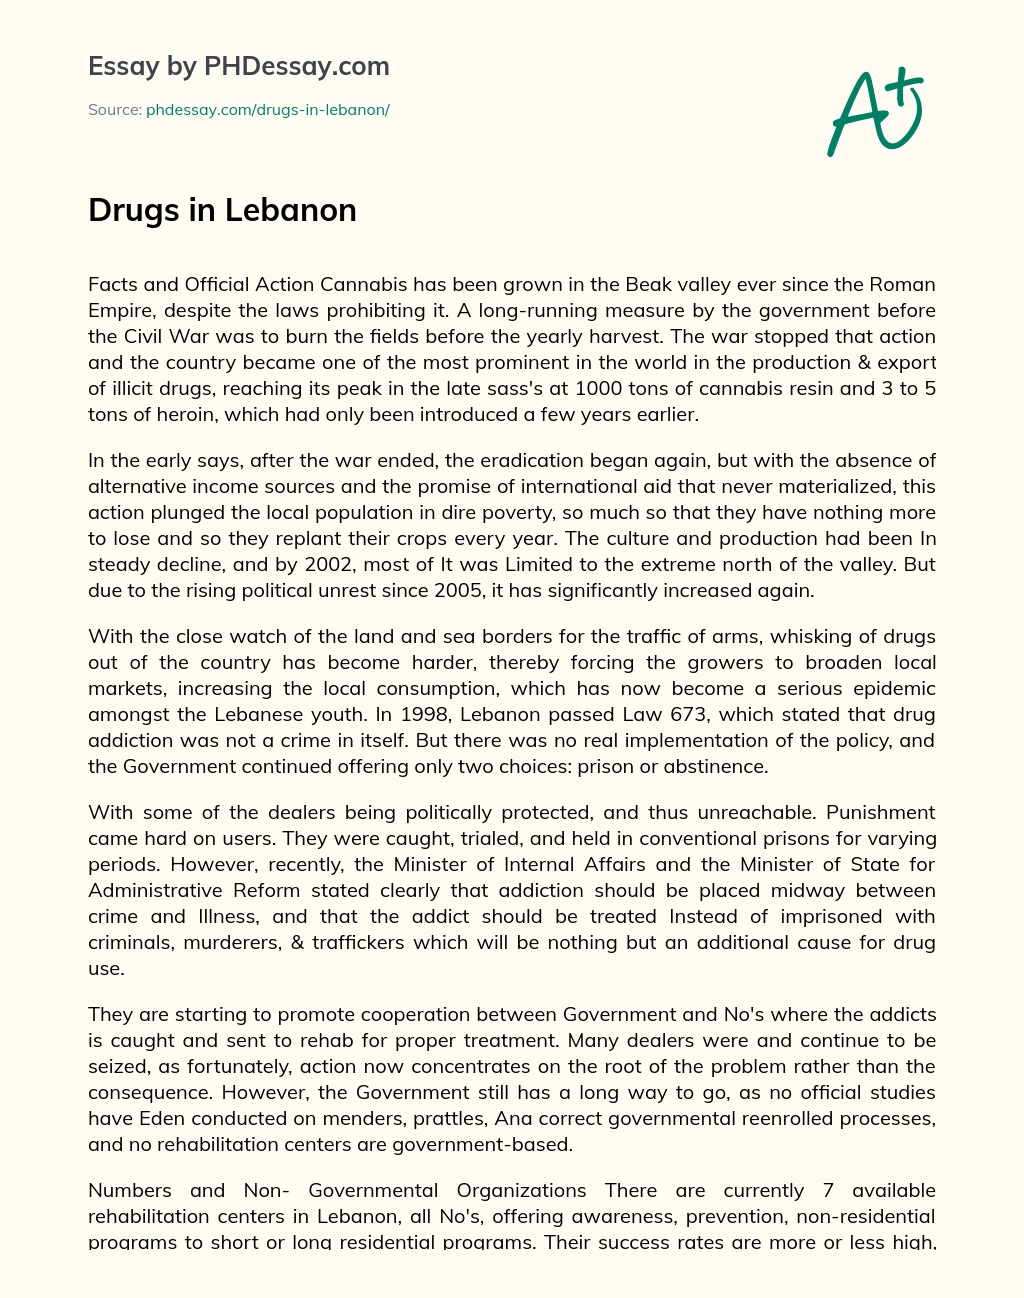 Drugs in Lebanon essay